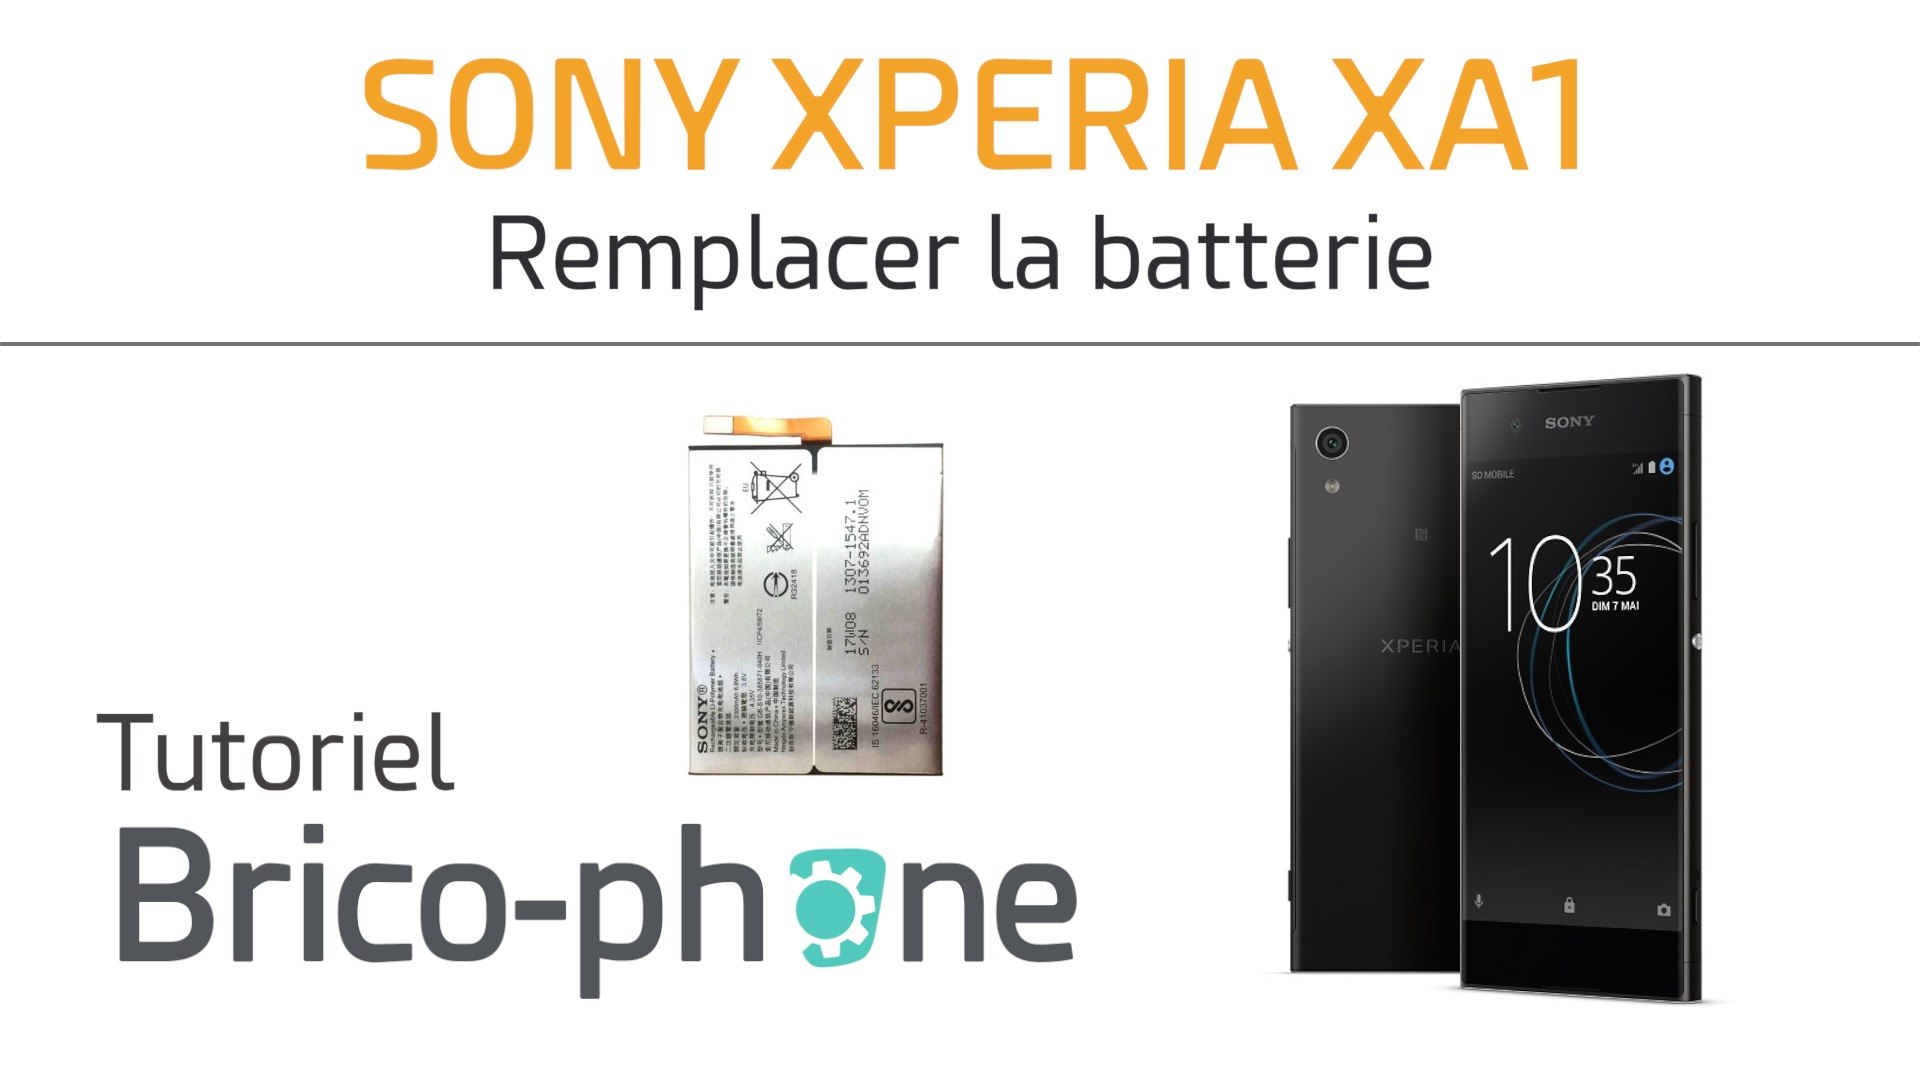 Sony Xperia XA1 : changer la batterie - Vidéo Dailymotion